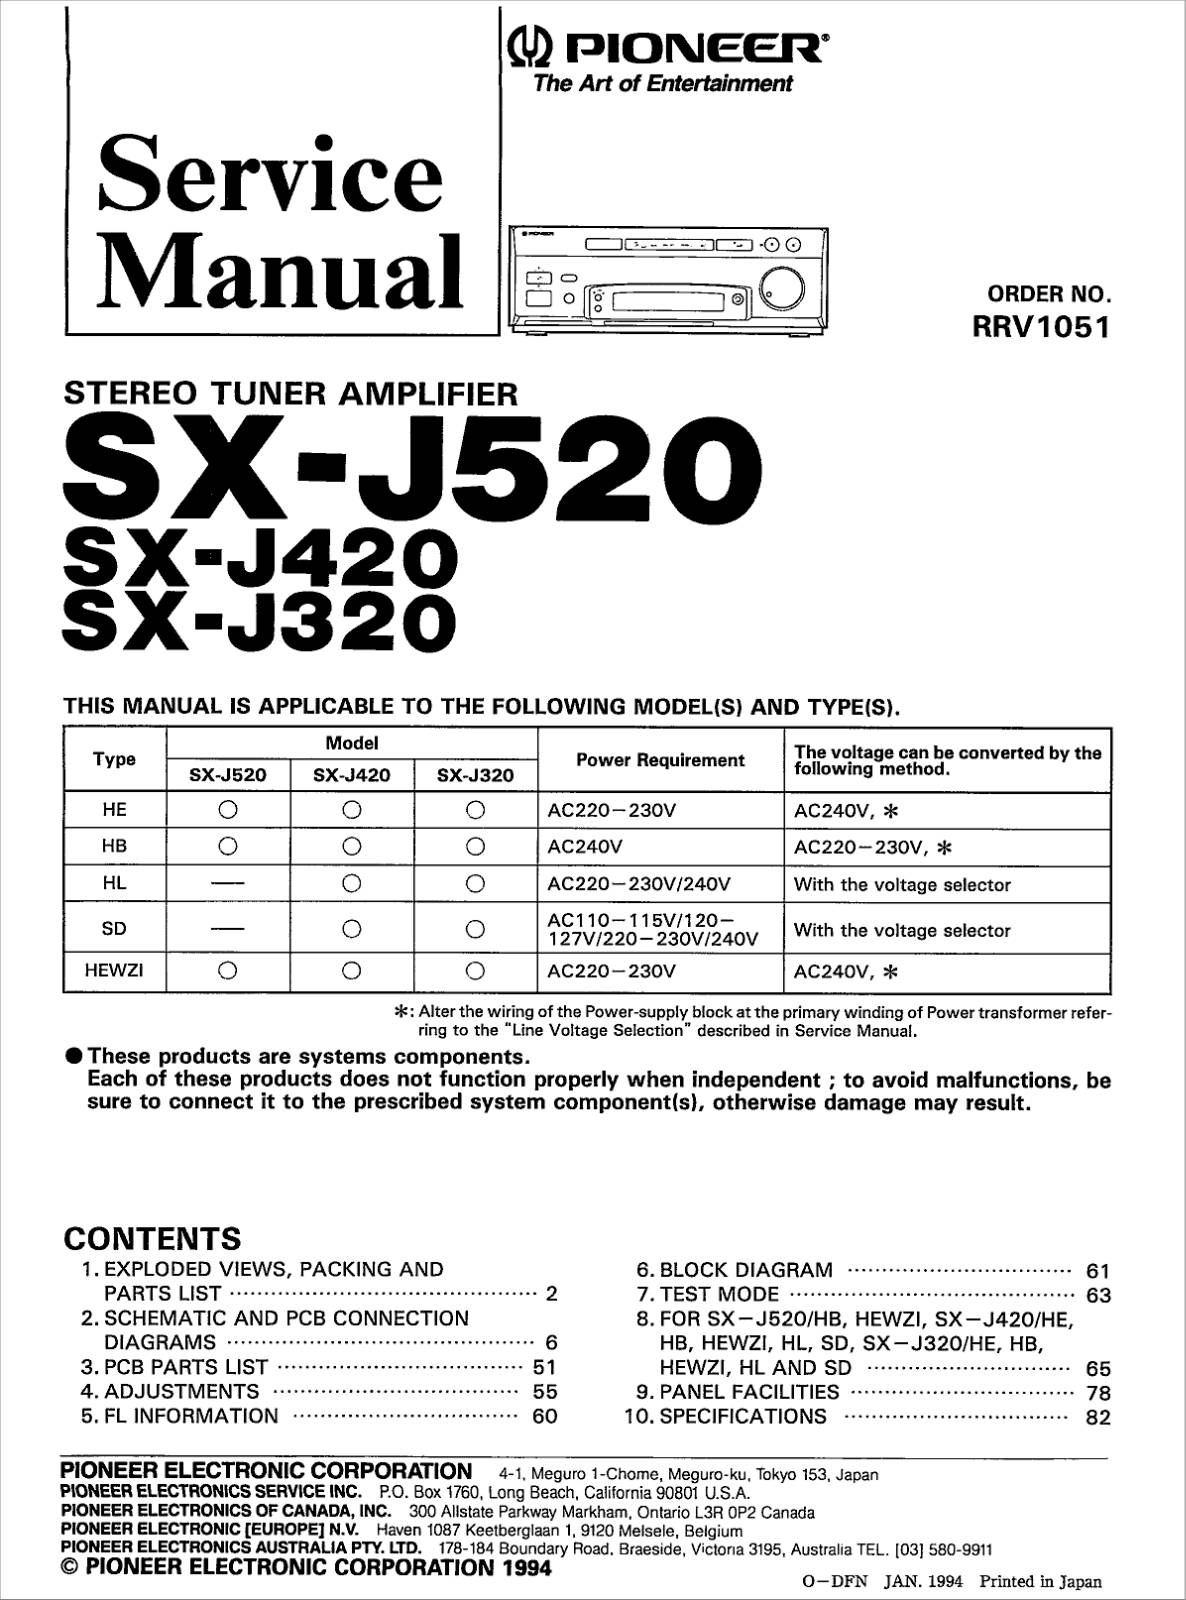 Pioneer SX-J520